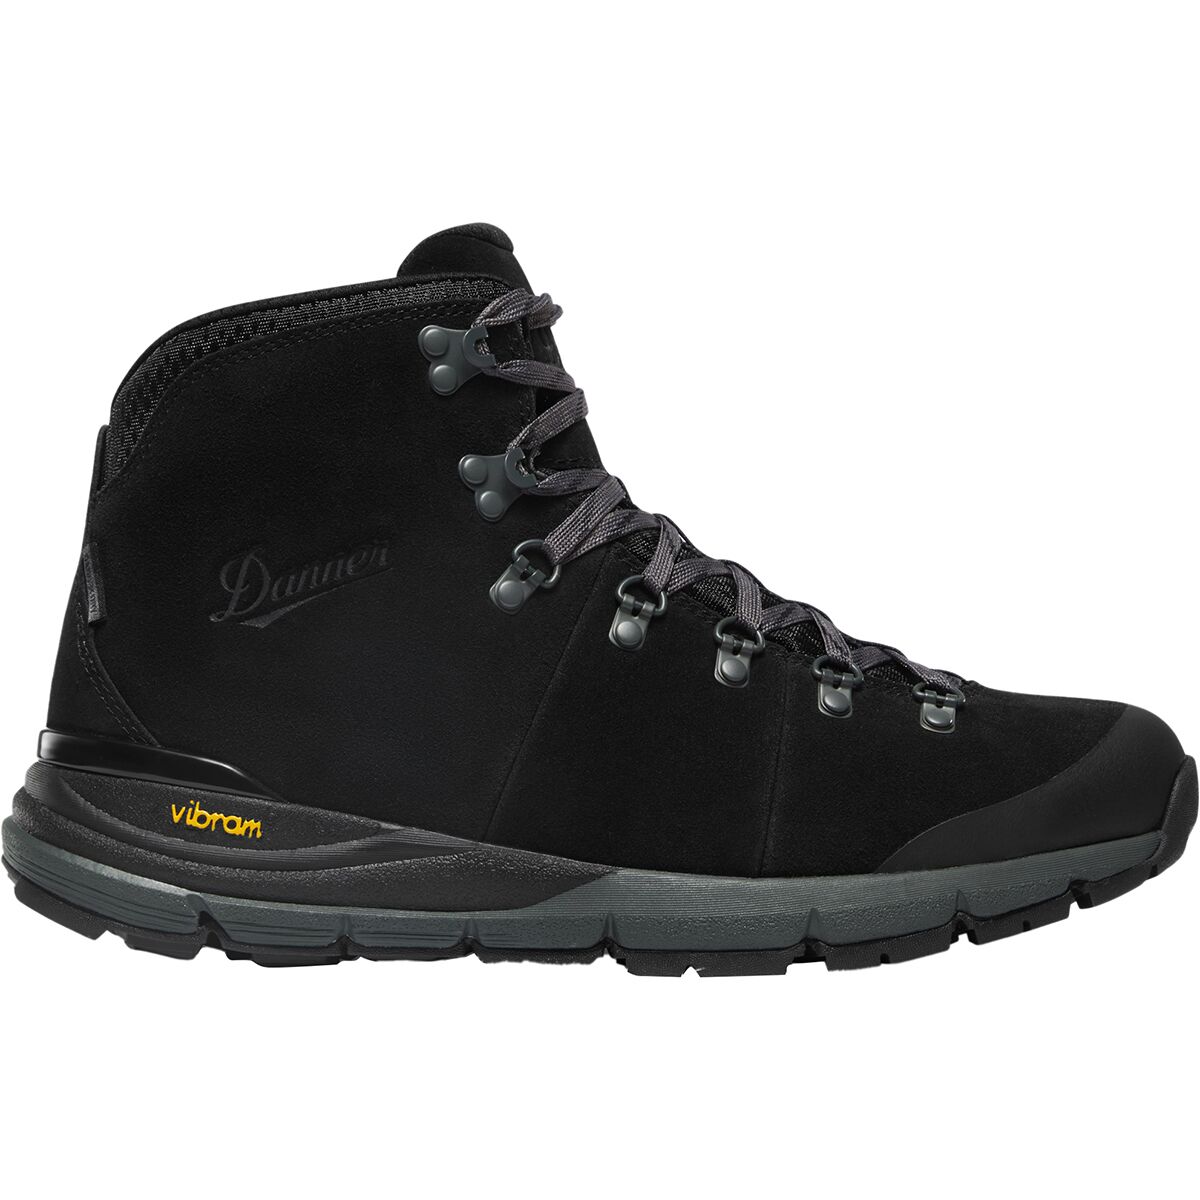 Mountain 600 Full-Grain Leather Hiking Boot - Men